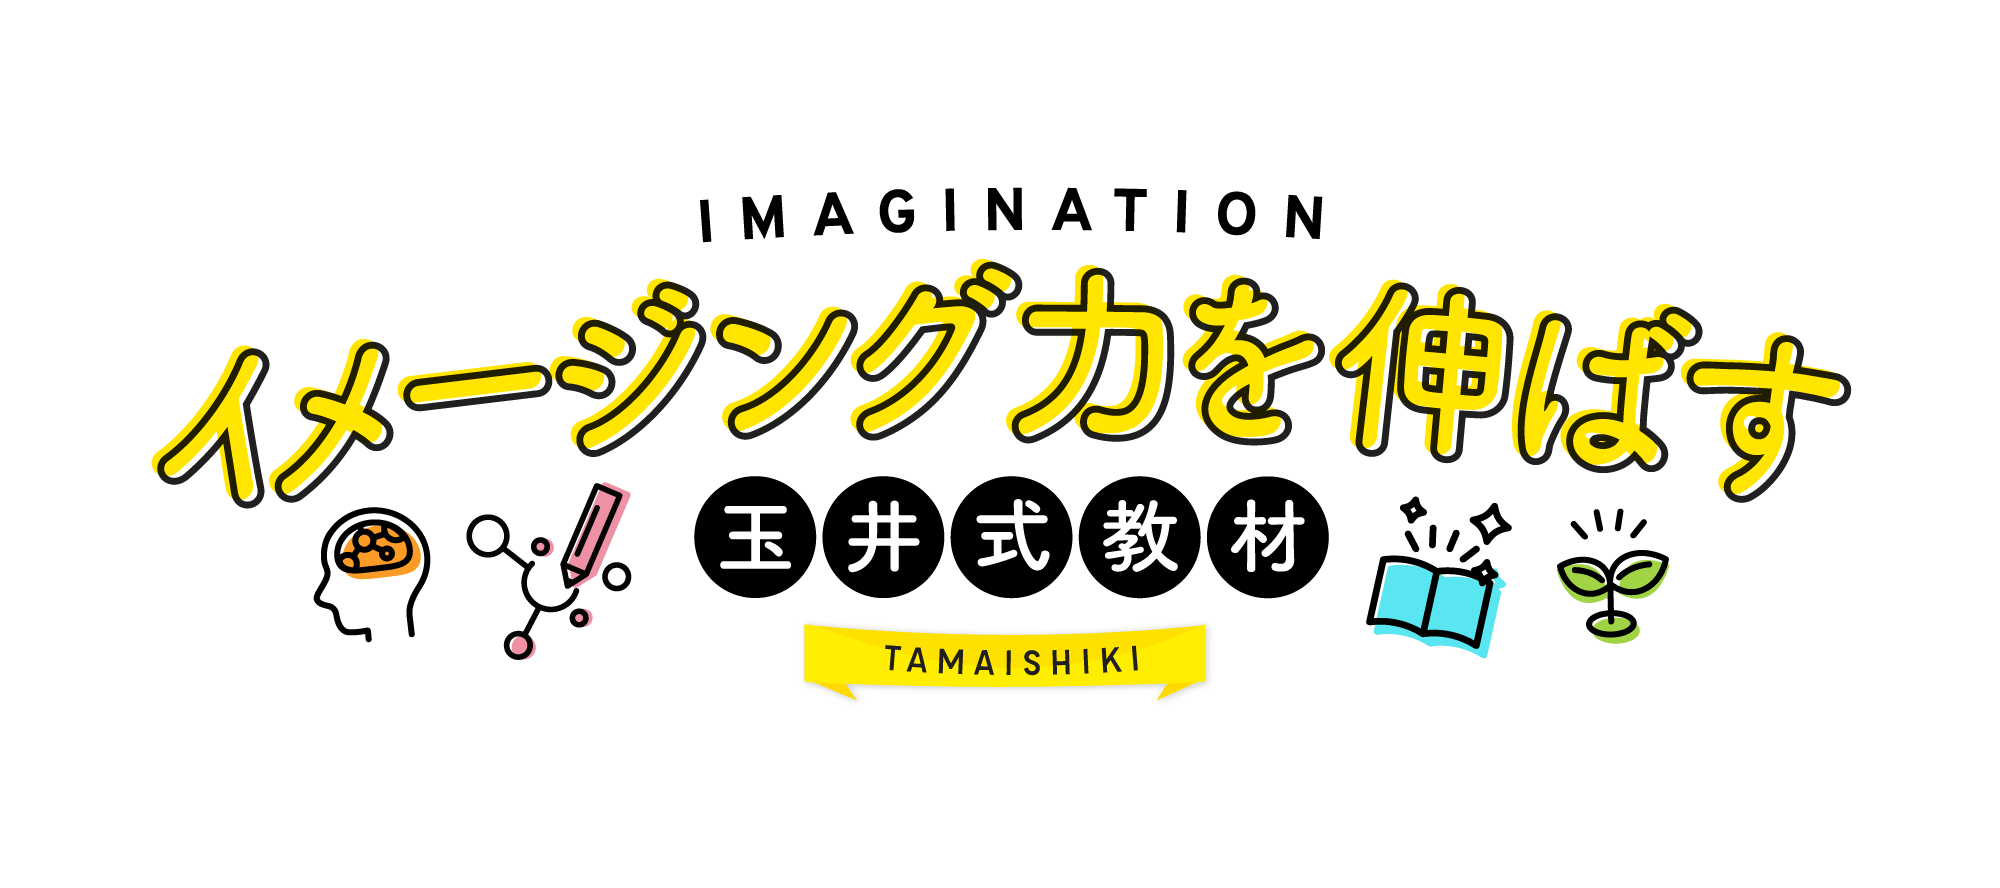 Tamaishiki extends your imagination skills